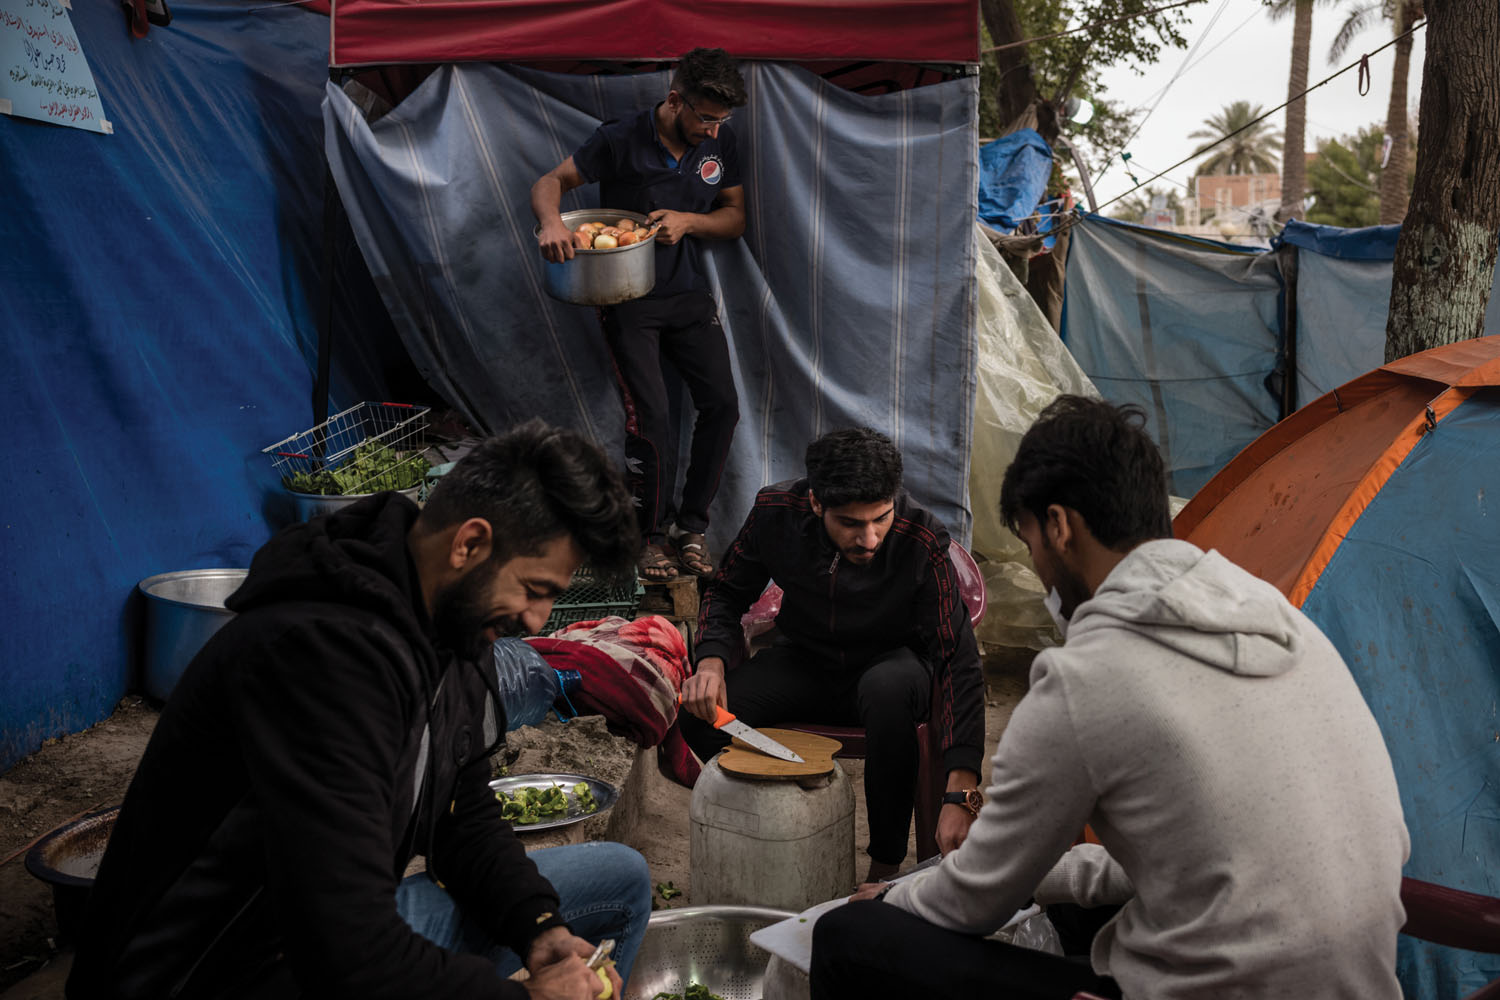 Protesters prepare breakfast in an encampment.